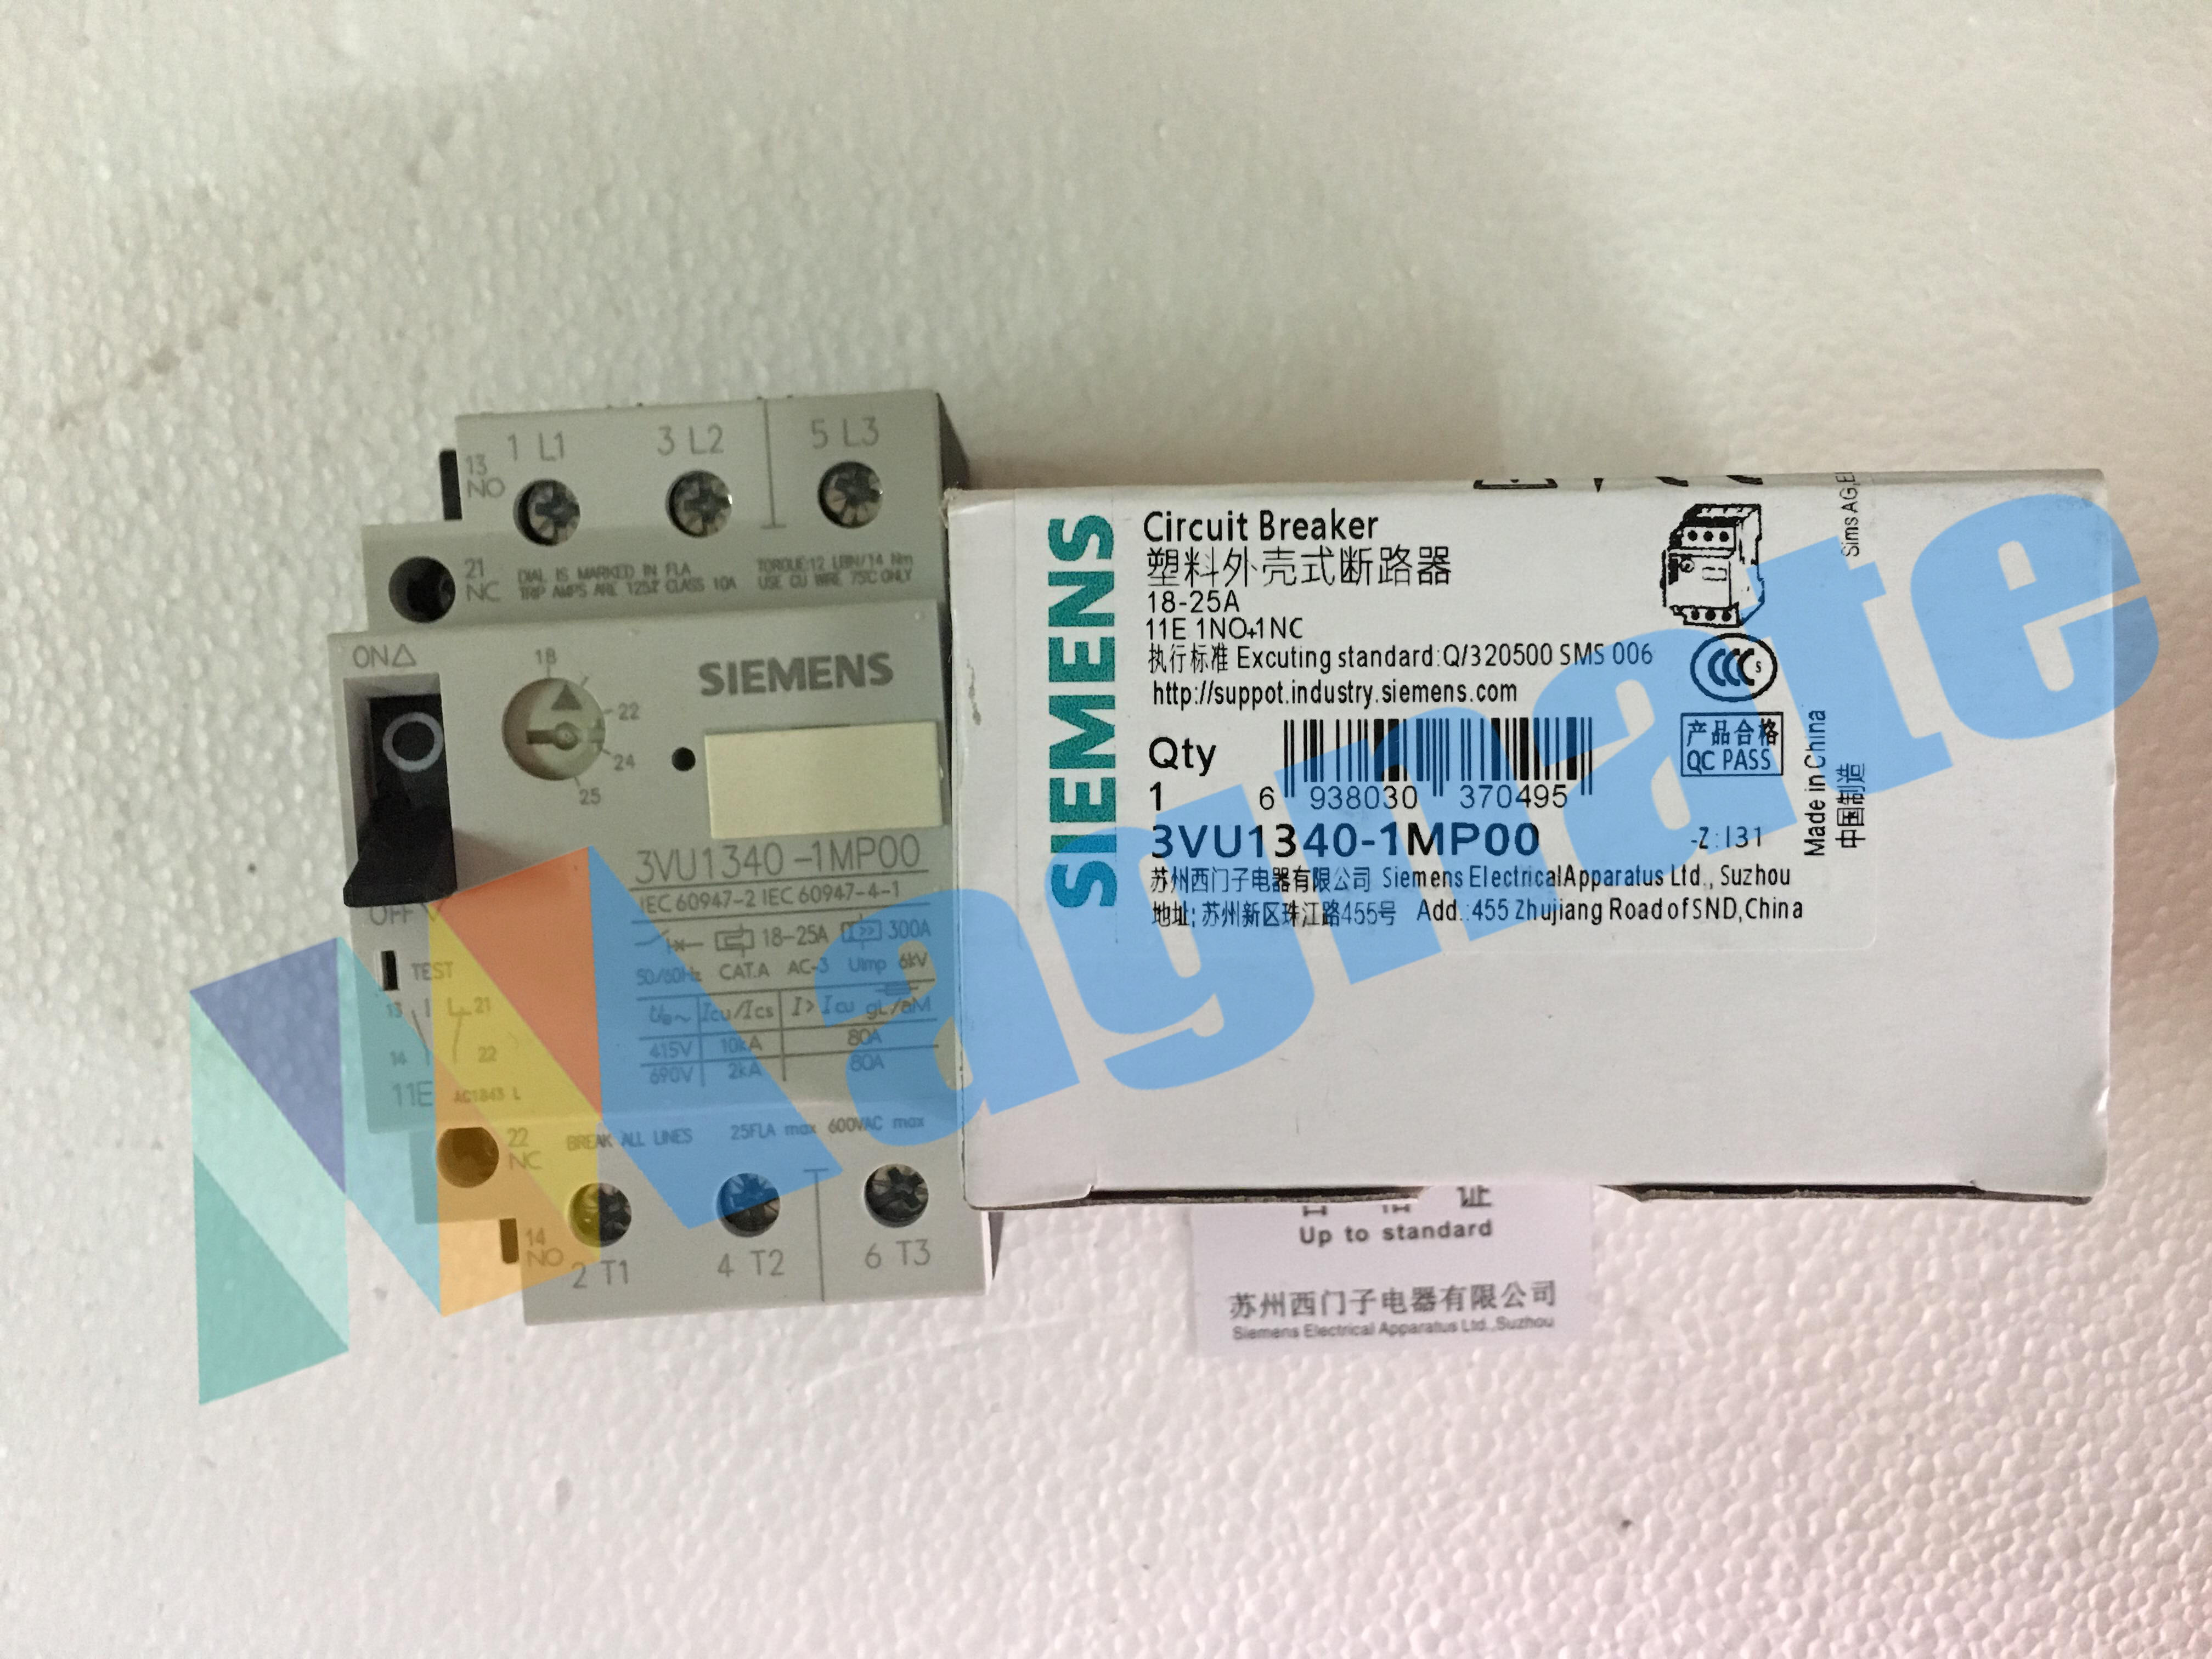 Siemens Circuit Breaker PN: 3VU1340-1MP00